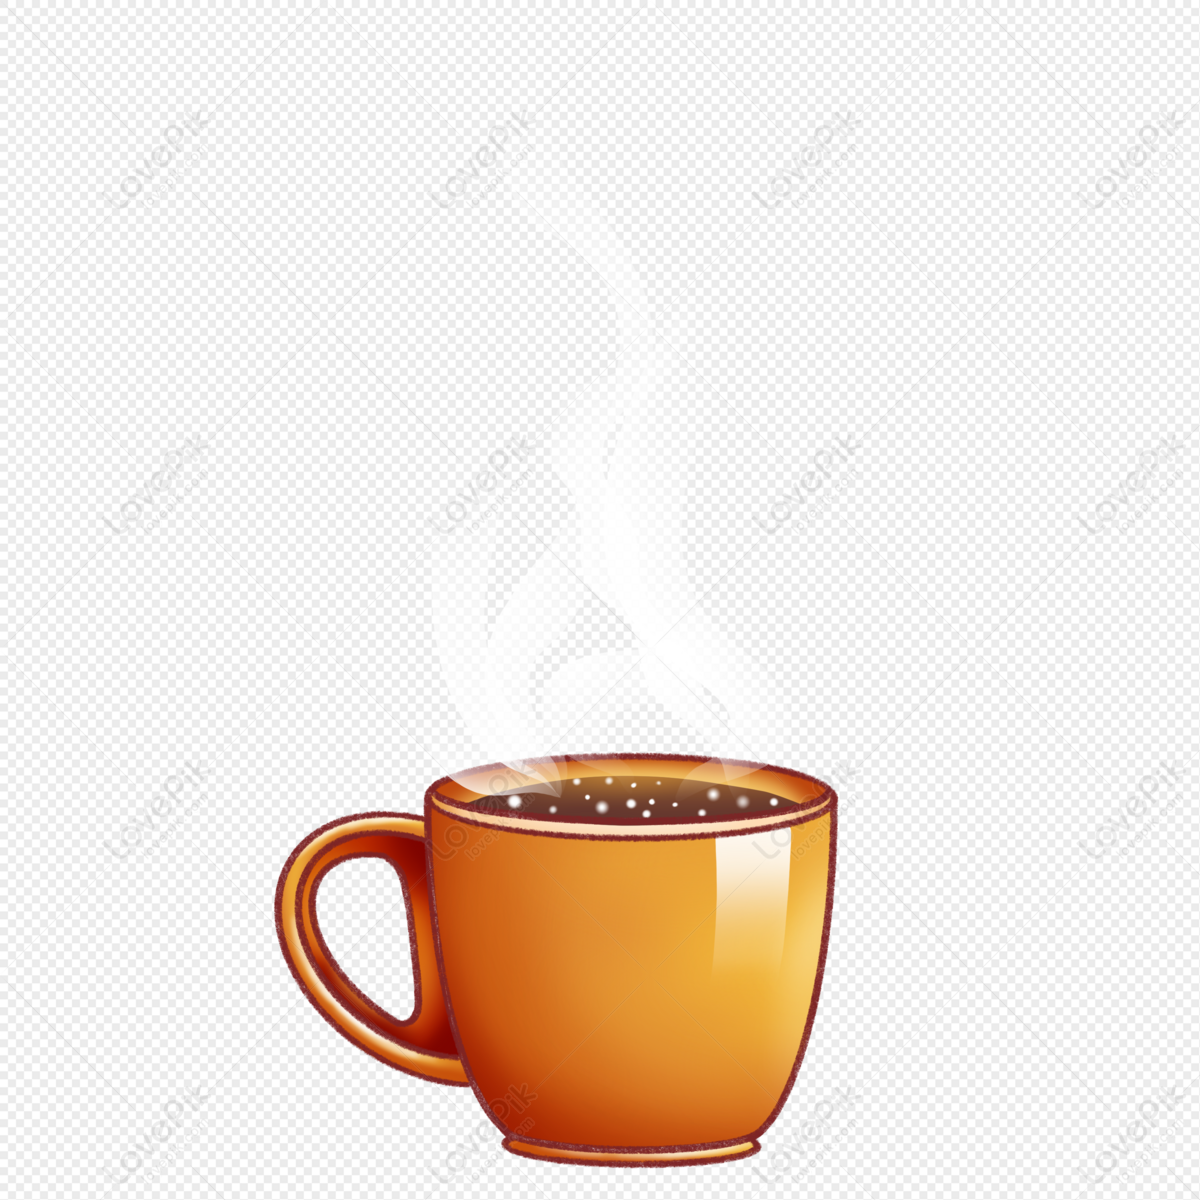 https://img.lovepik.com/free-png/20220126/lovepik-steaming-coffee-png-image_401807120_wh1200.png